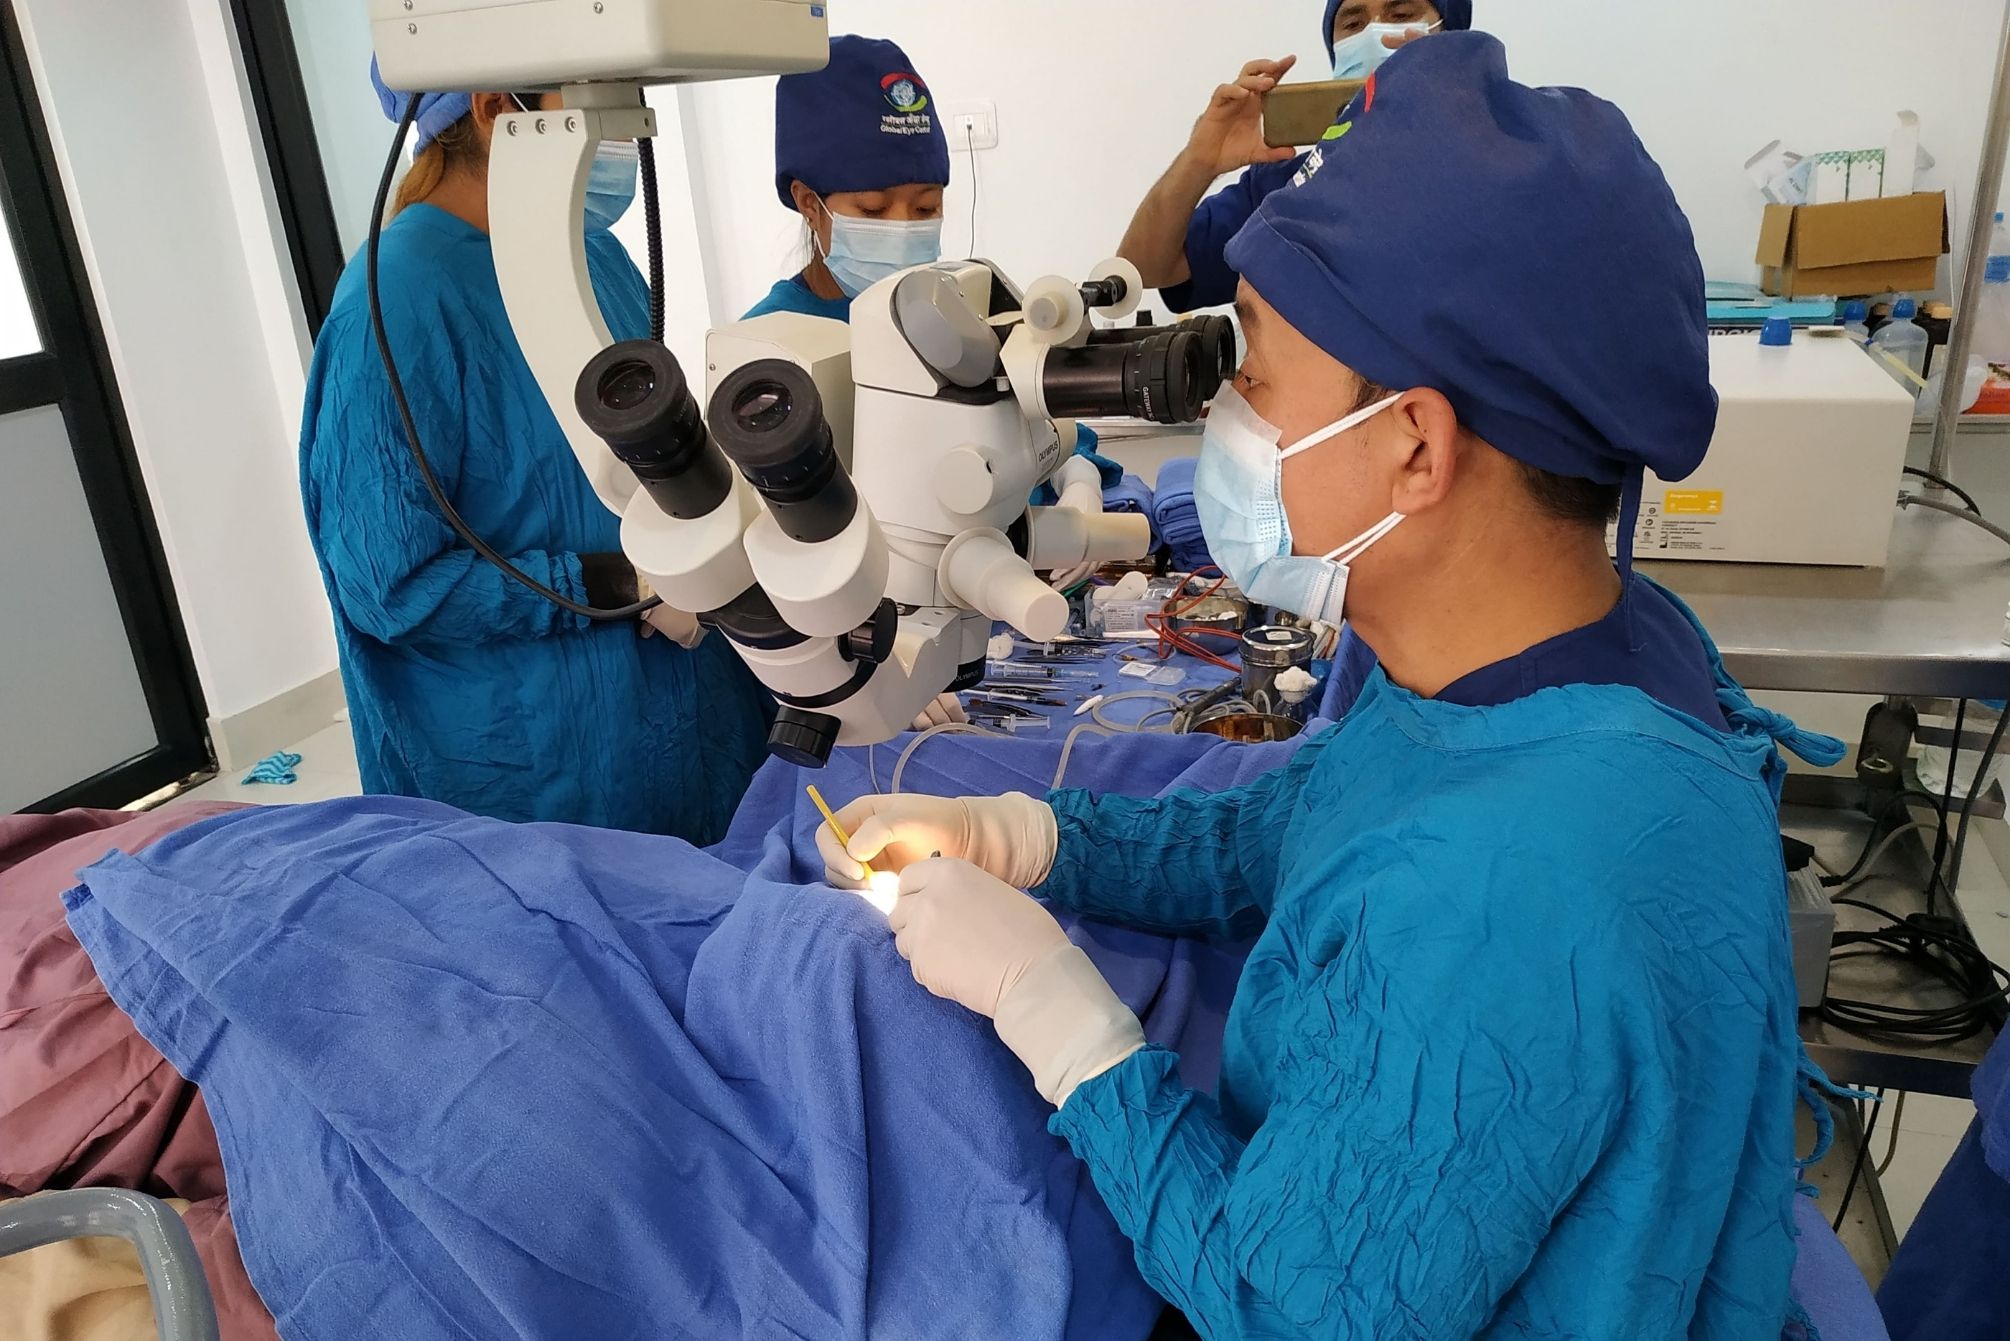 Rohto Organized a Free Cataract Surgery to Disadvantaged People